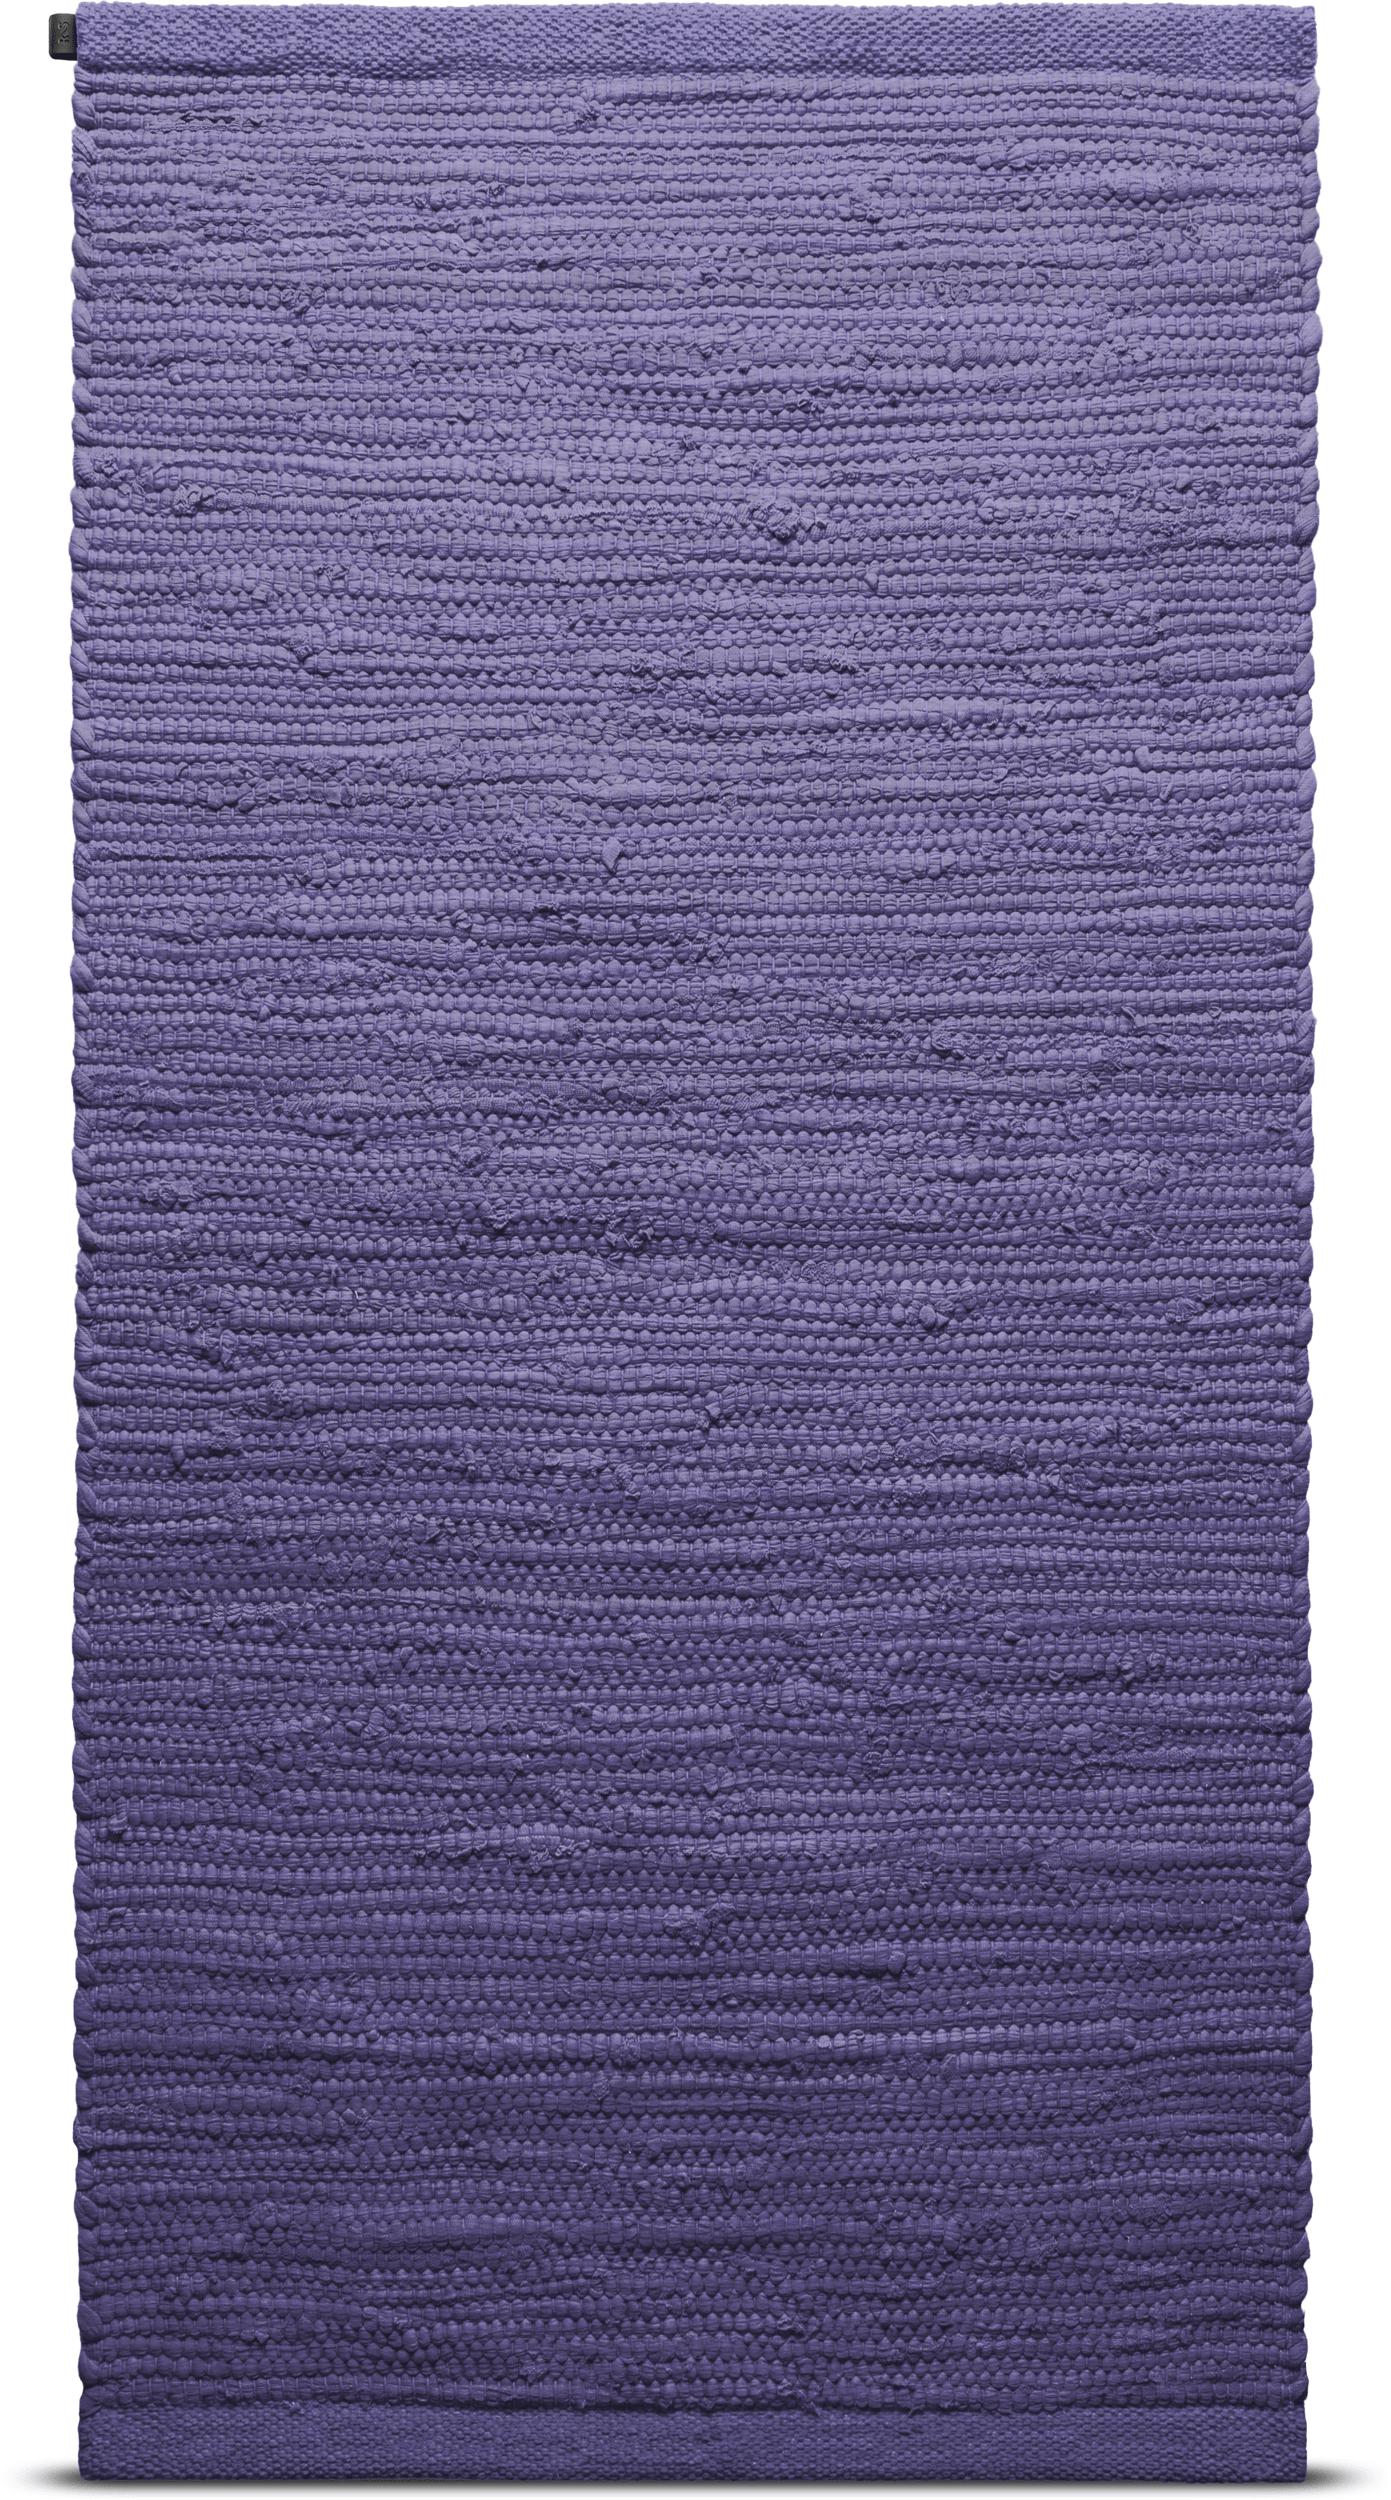 Koberec pevný bavlněný koberec 170 x 240 cm, elektrický